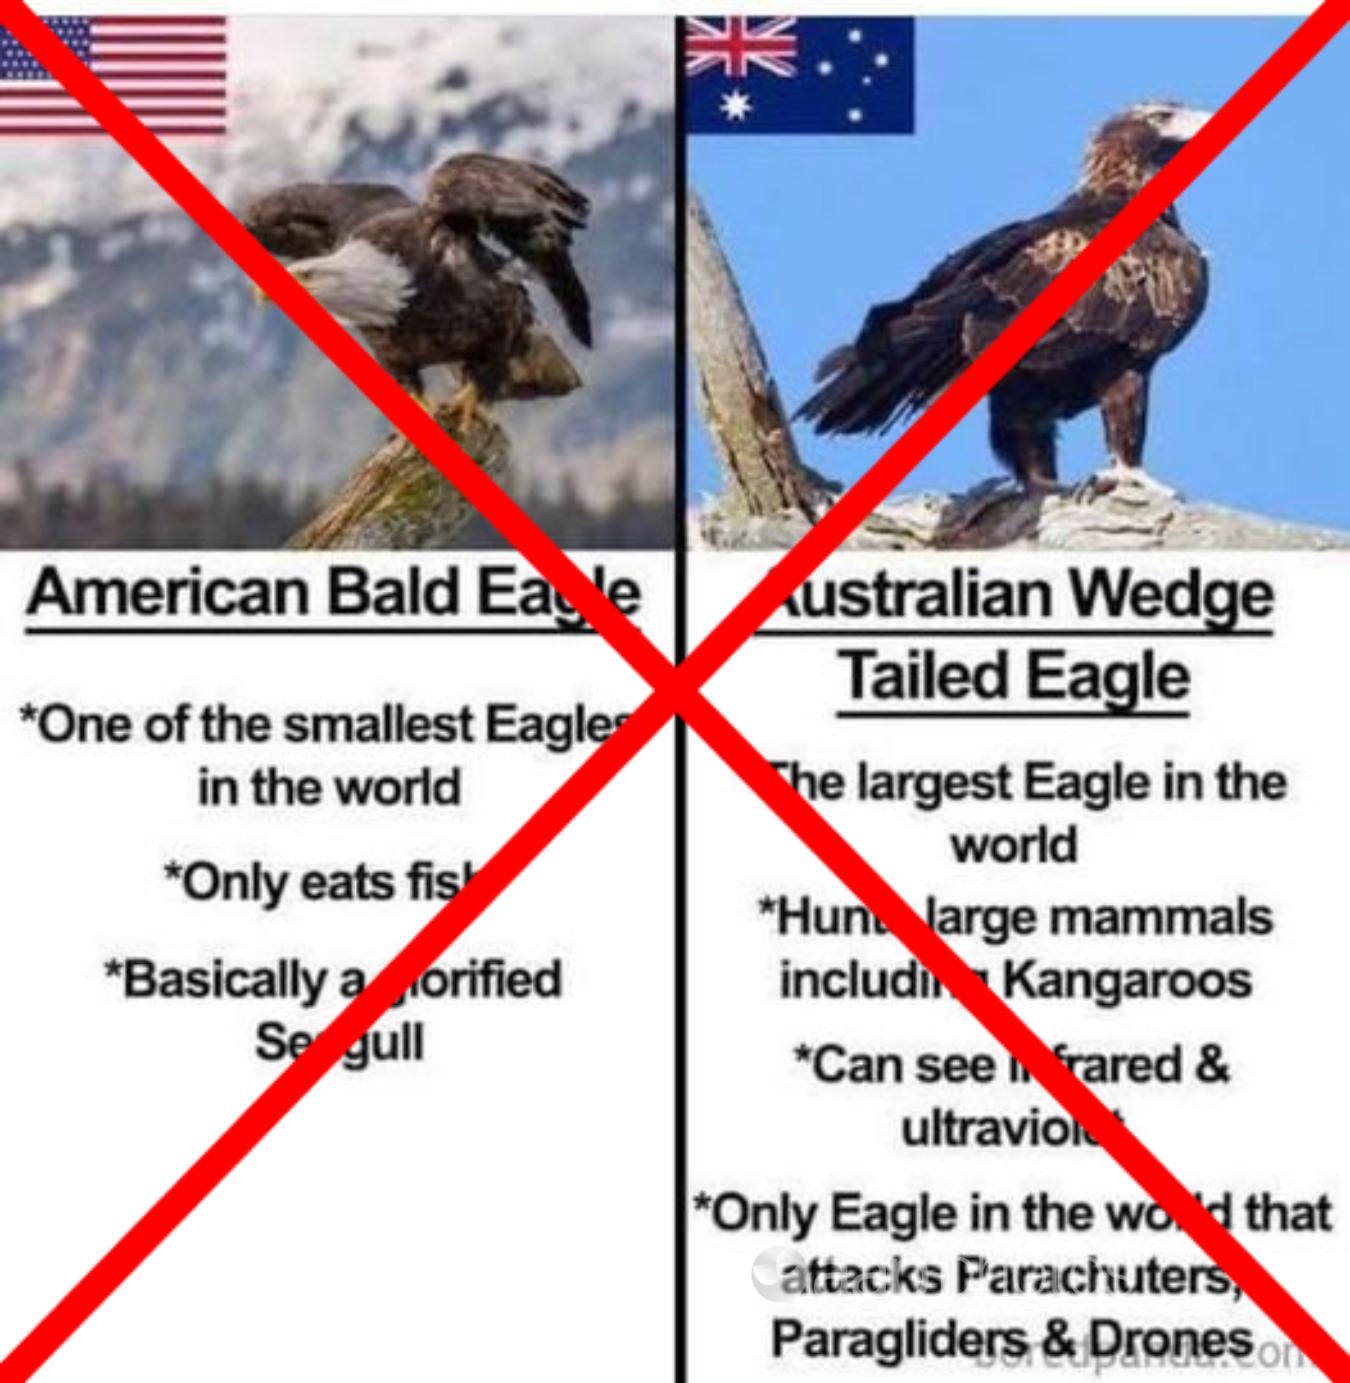 The eagle comparison meme